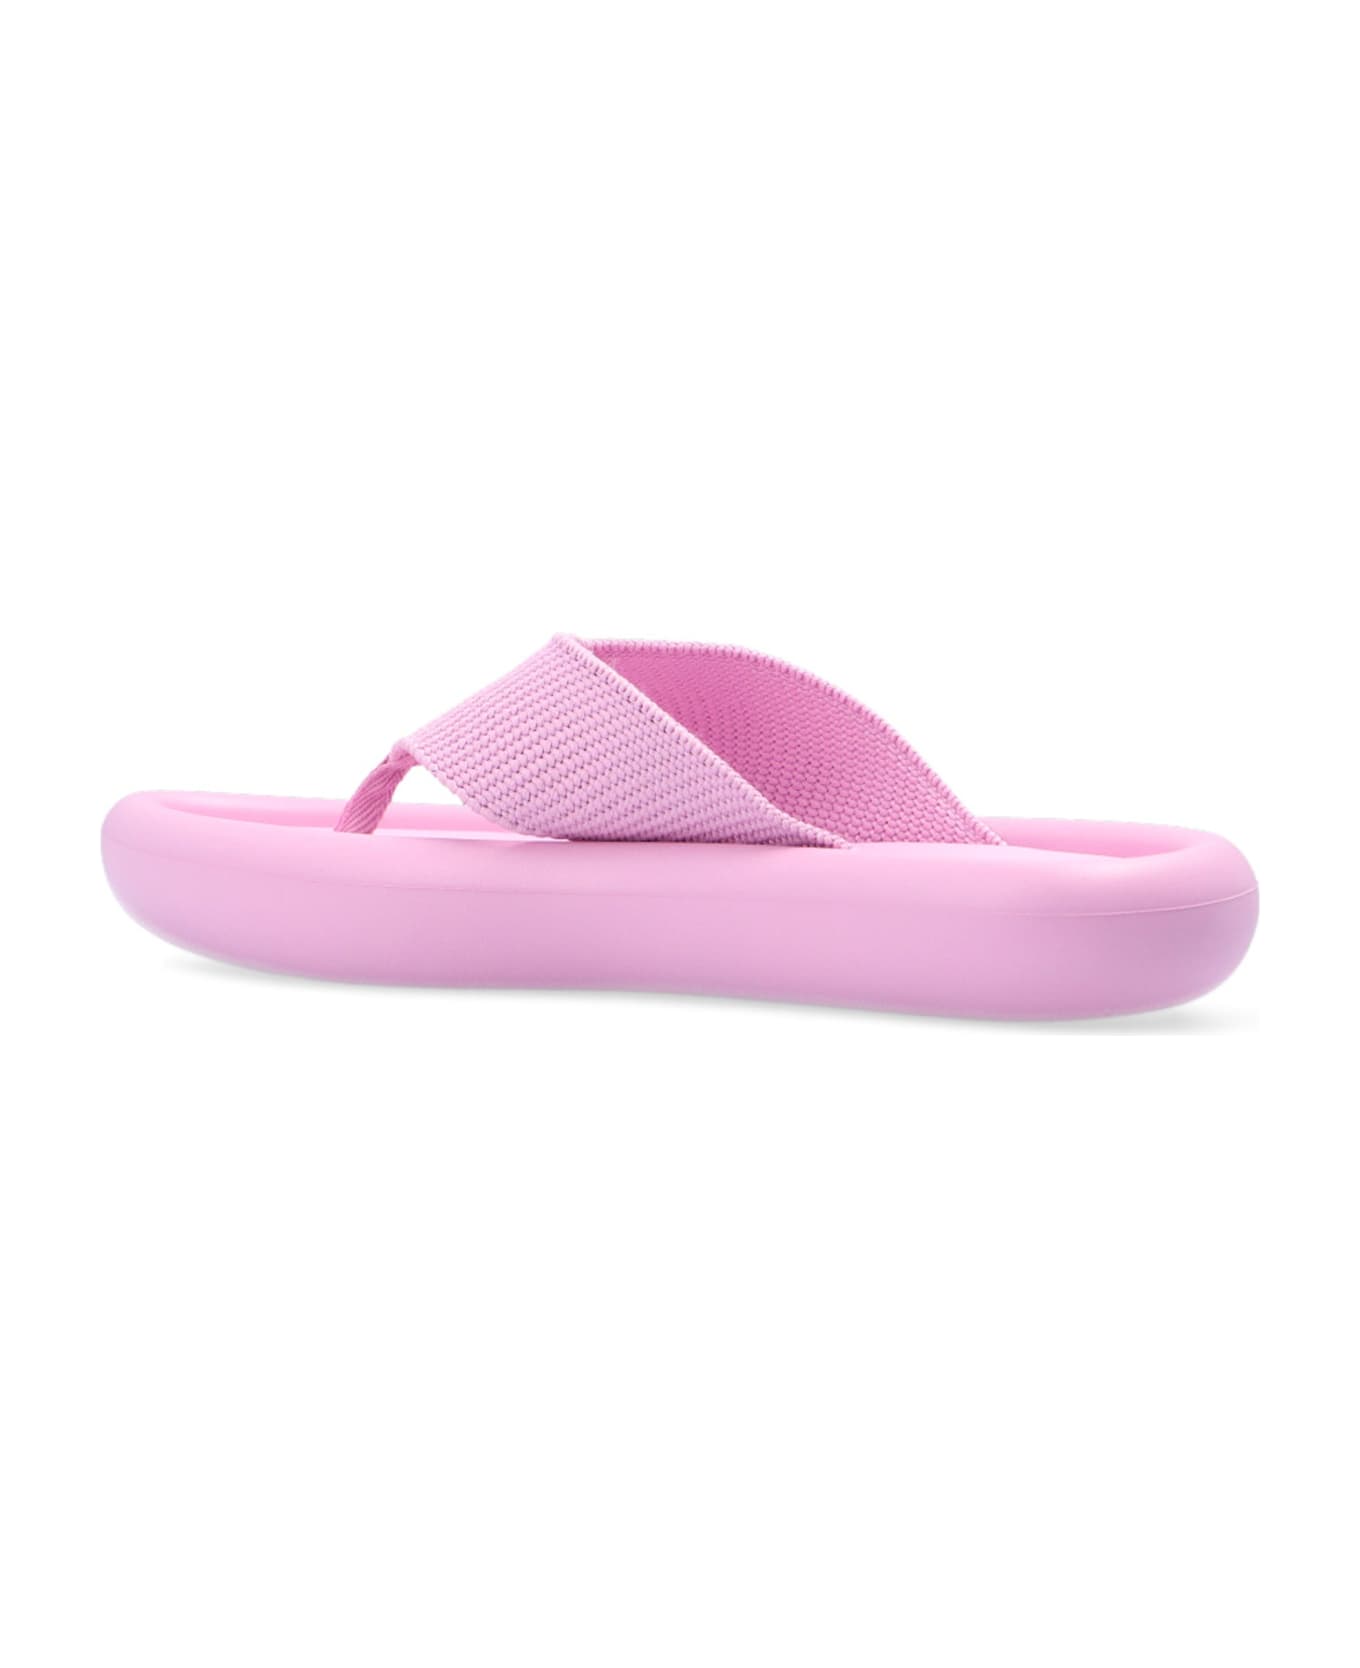 Stella McCartney Air Slides - Pink